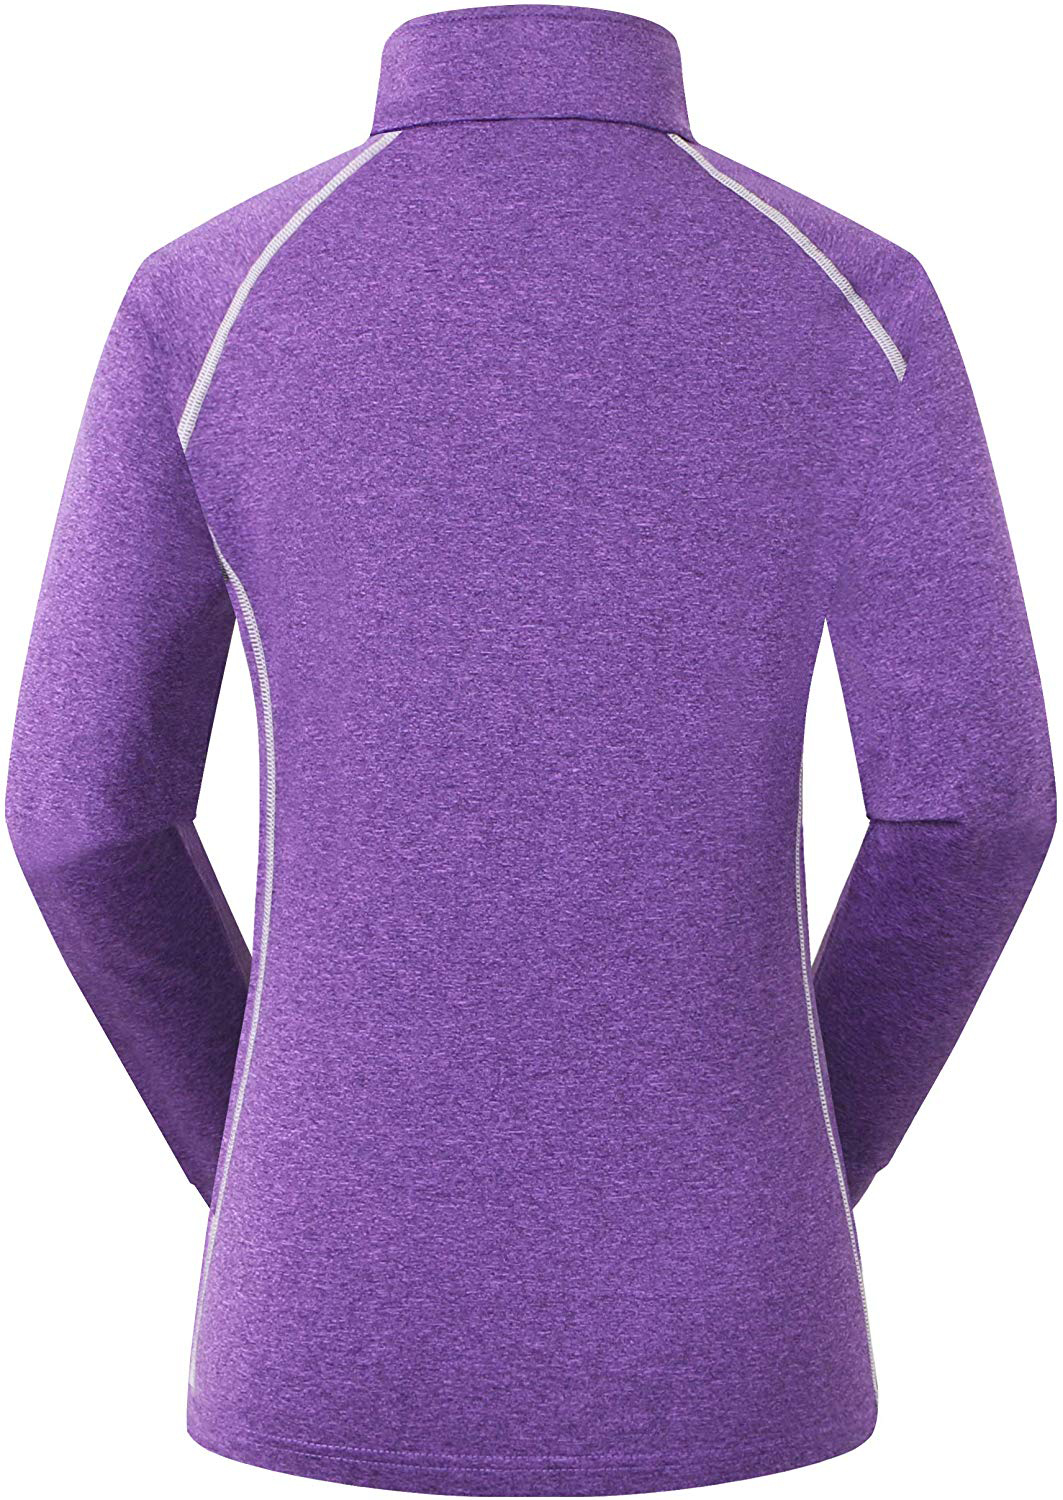  women's sports knitted jacket outdoor jumper